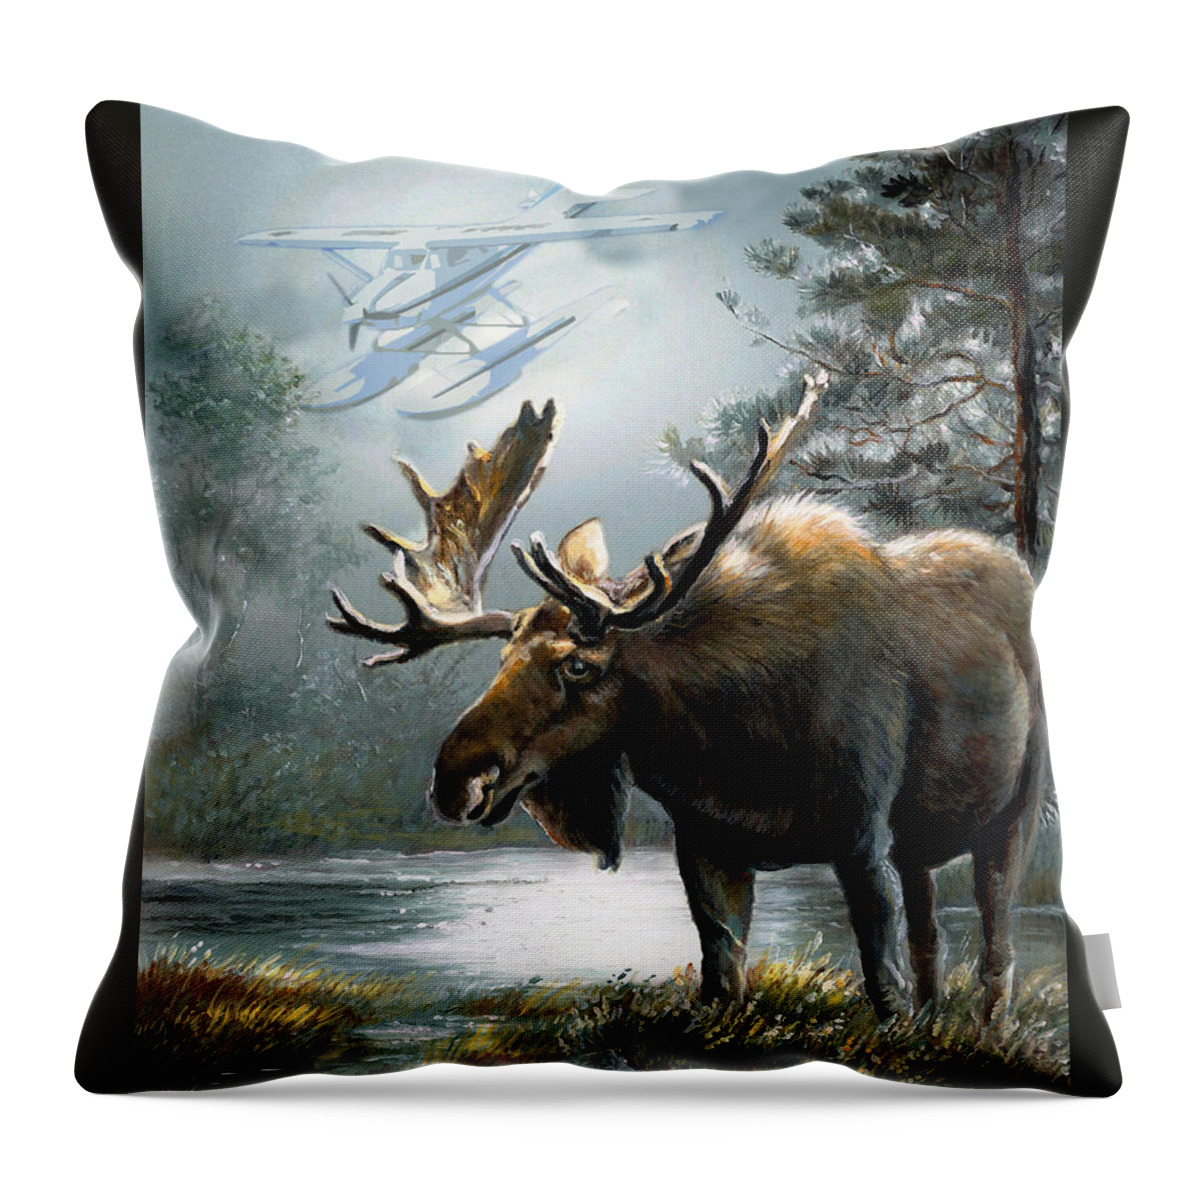 Alaska Moos With Floatplane Animal Art Throw Pillow featuring the painting Alaska moose with floatplane by Regina Femrite